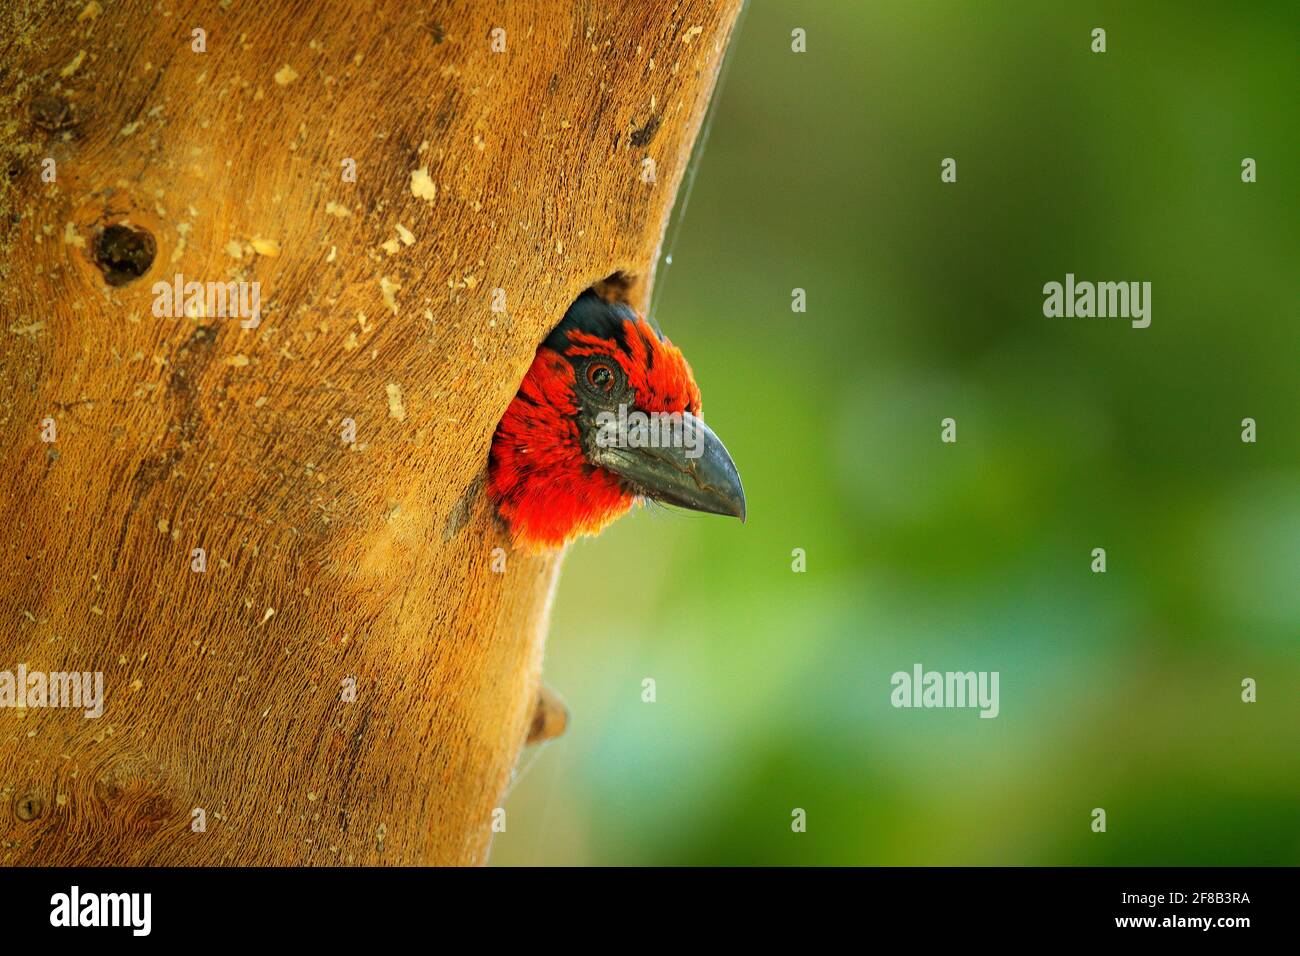 Barbet on the nest. Red head bird in tree nesting hole, animal behaviour in the forest nature. Black-collared barbet, Lybius torquatus, in the habitat Stock Photo